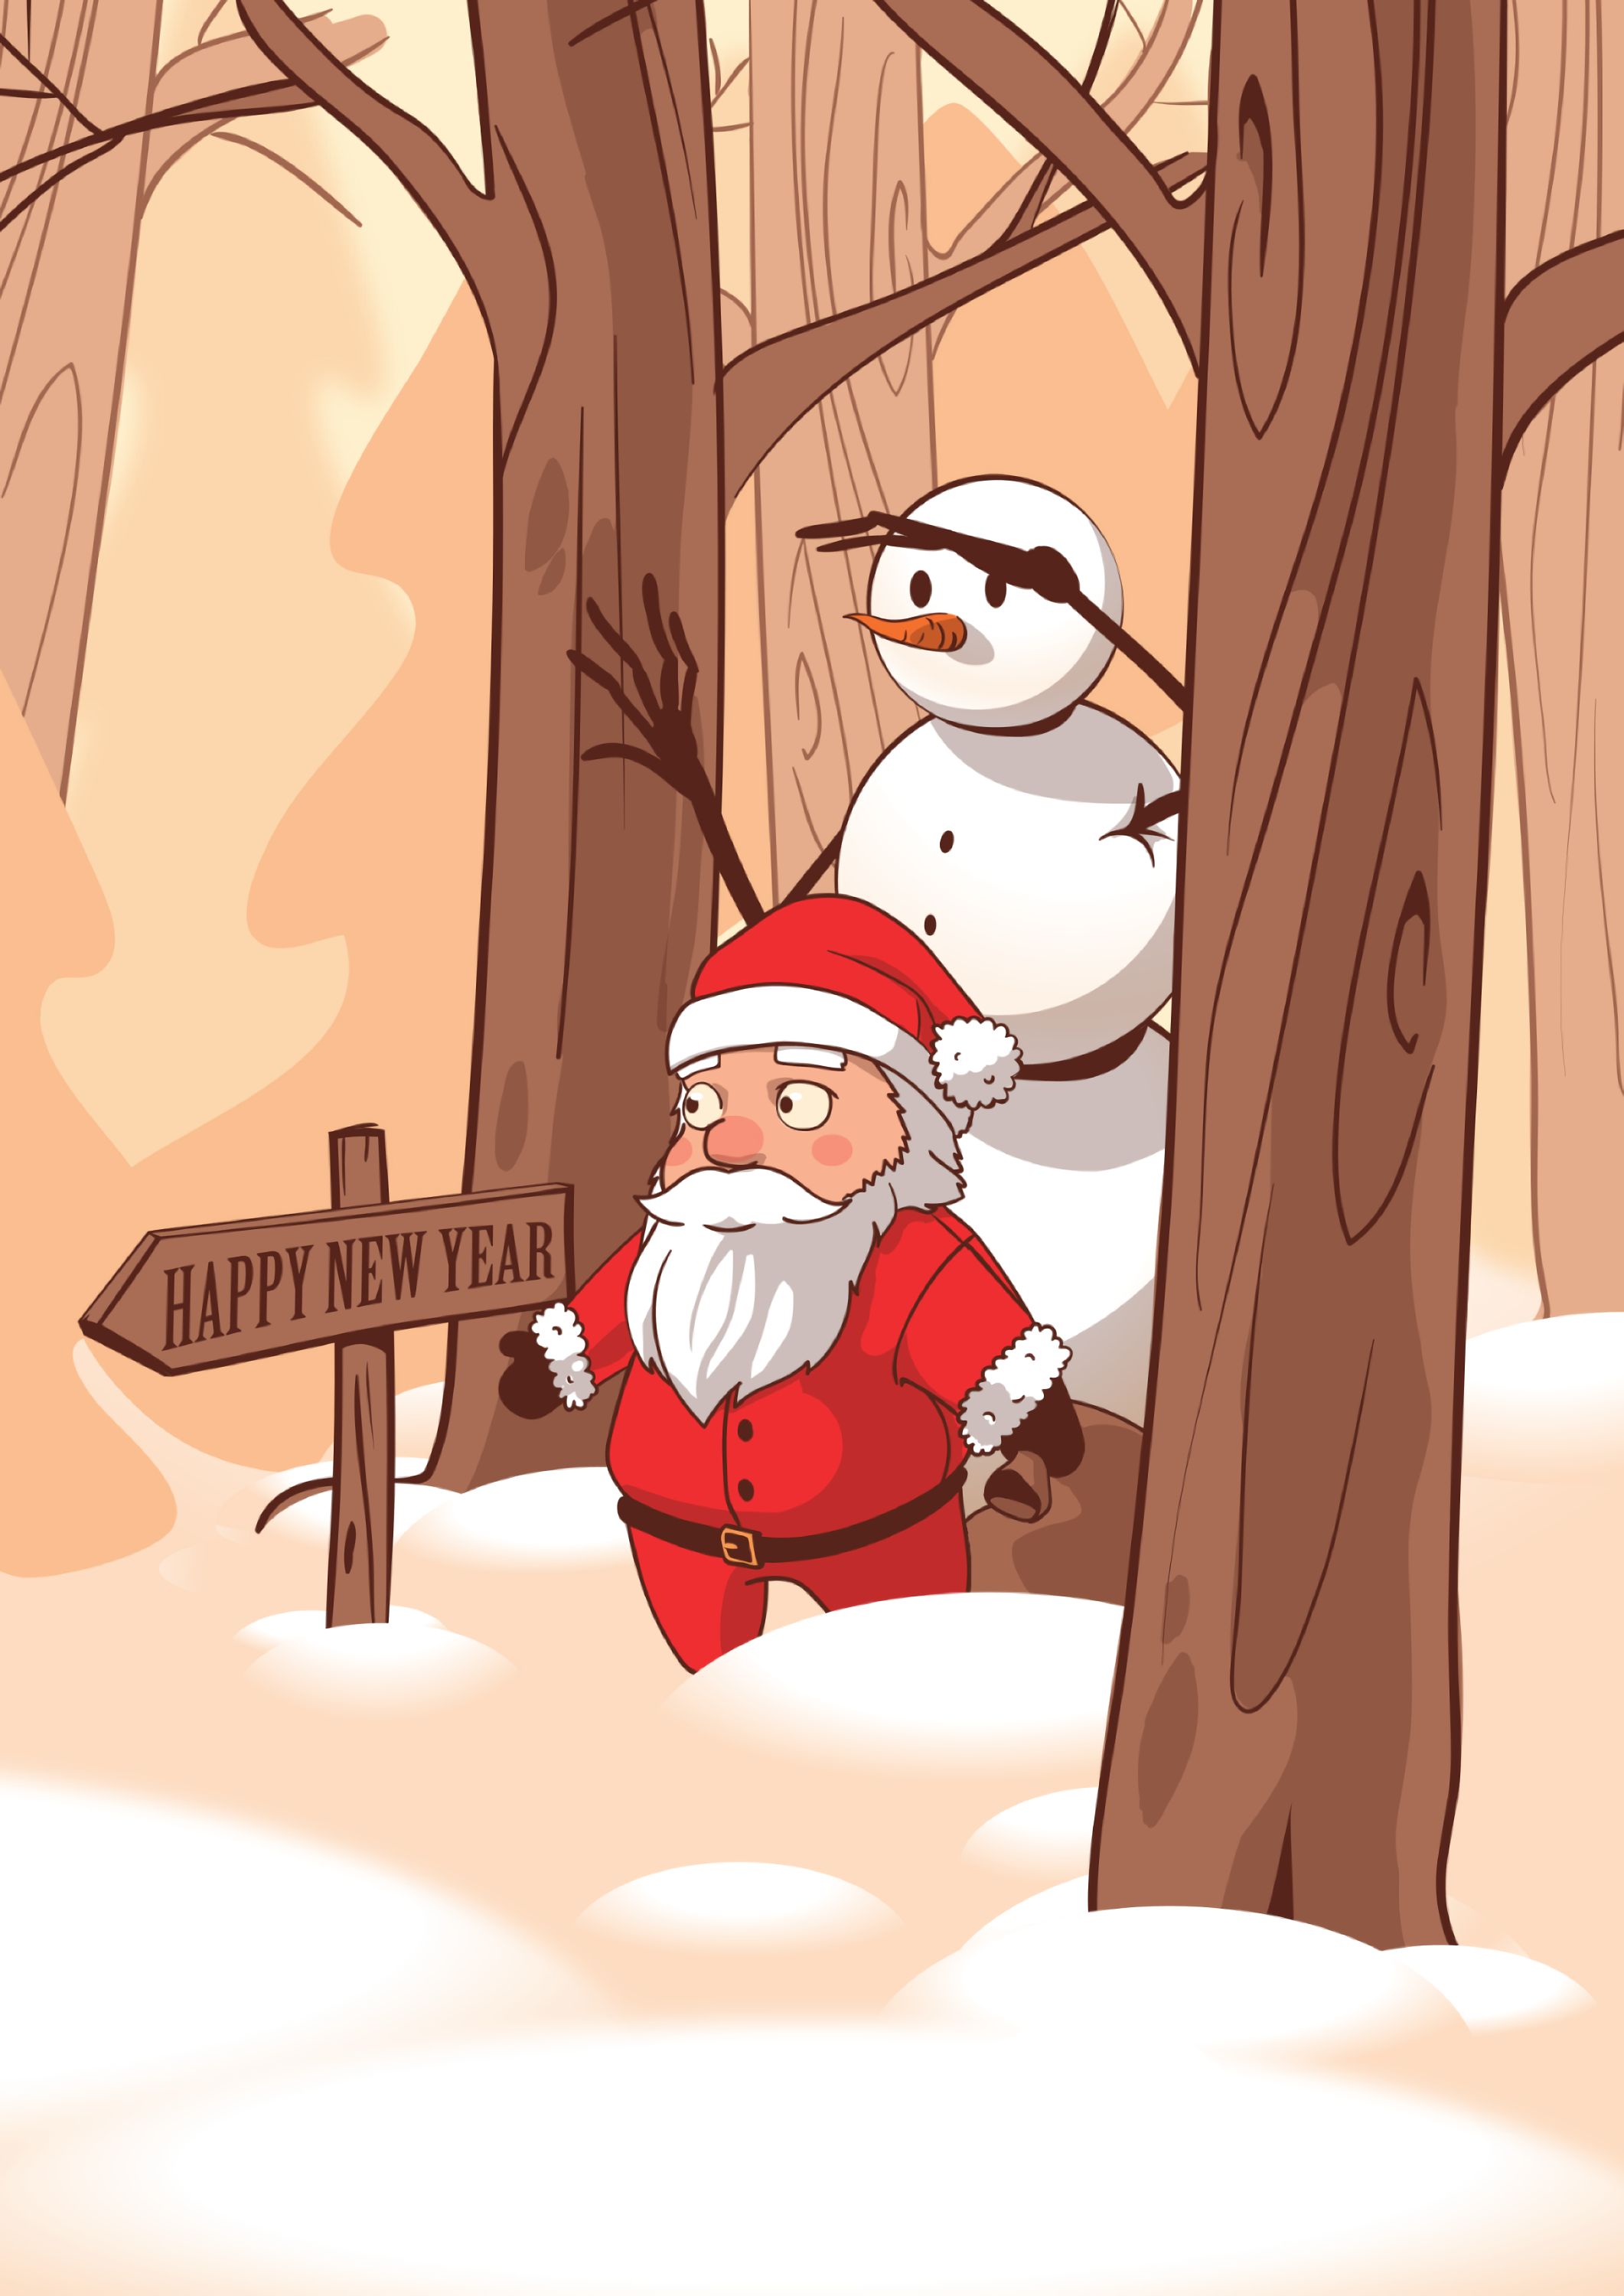 8k Santa Claus Images